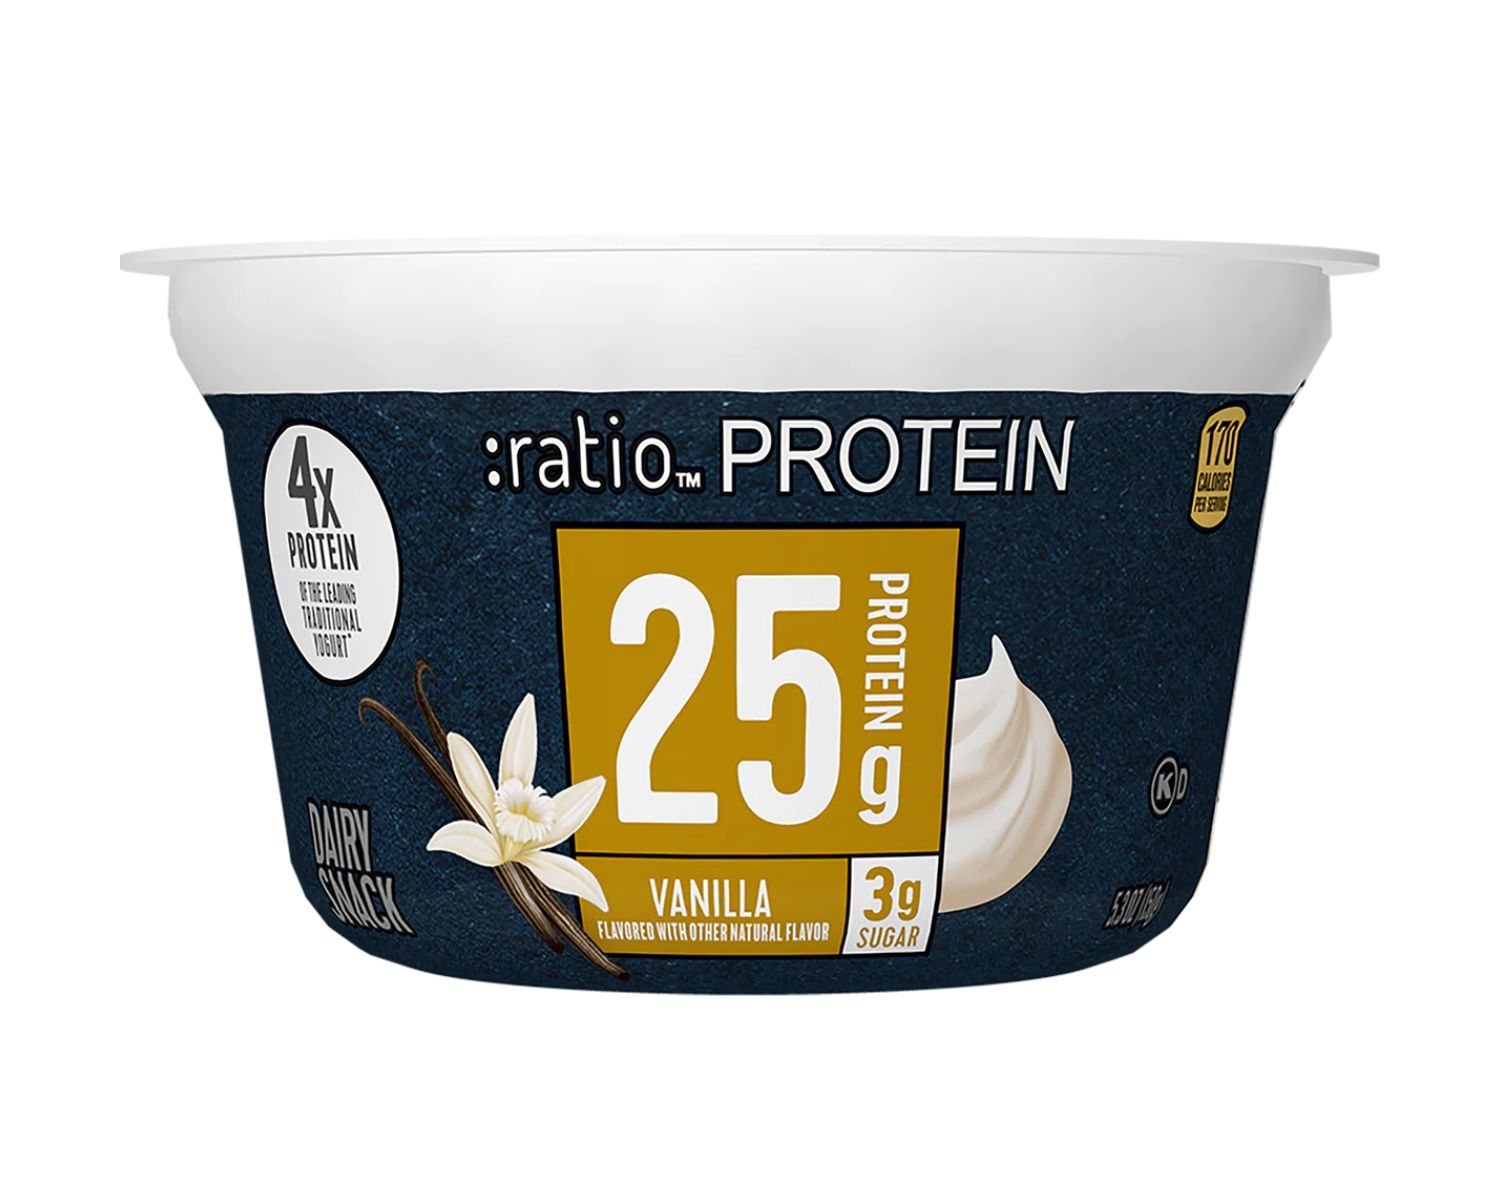 19-ratio-yogurt-nutrition-facts